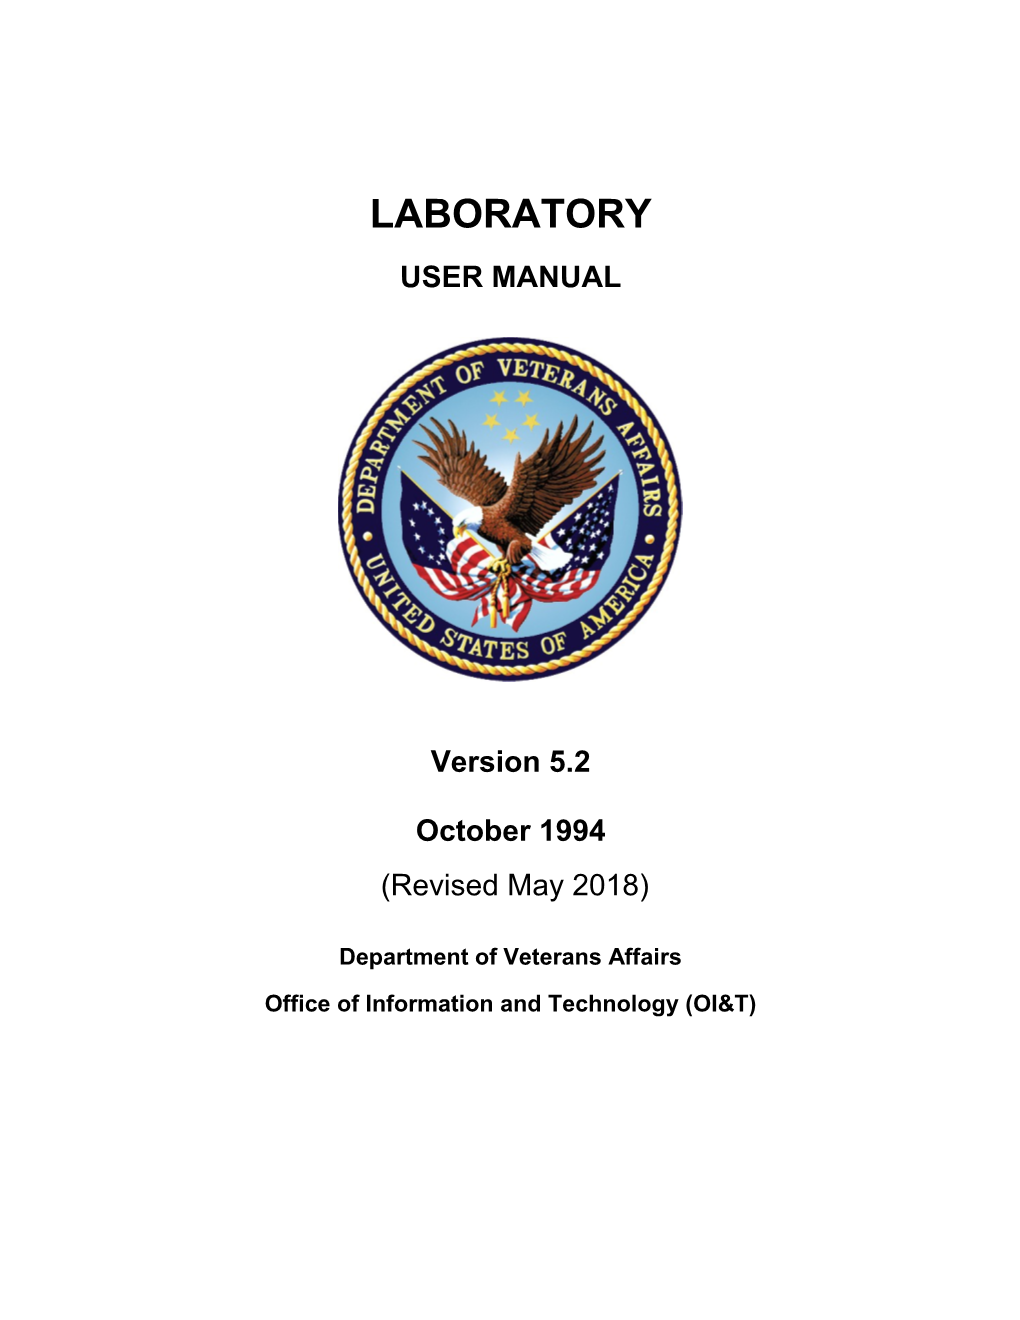 Laboratory User Manual